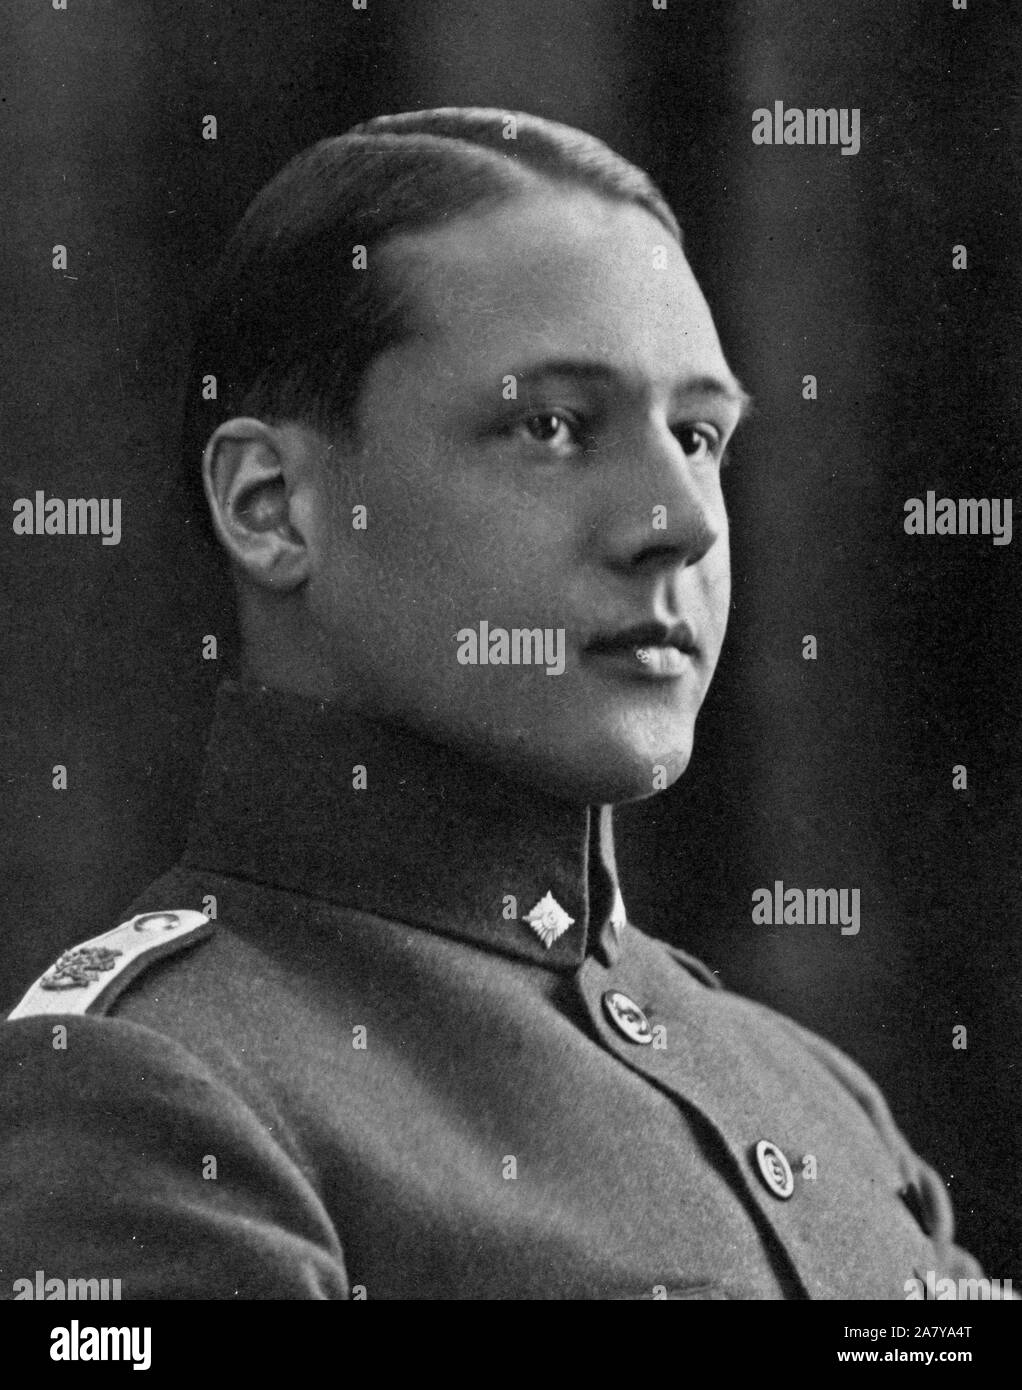 Portrait of Jorma Gallen-Kallela after the Finnish Civil War, 1918 Stock Photo